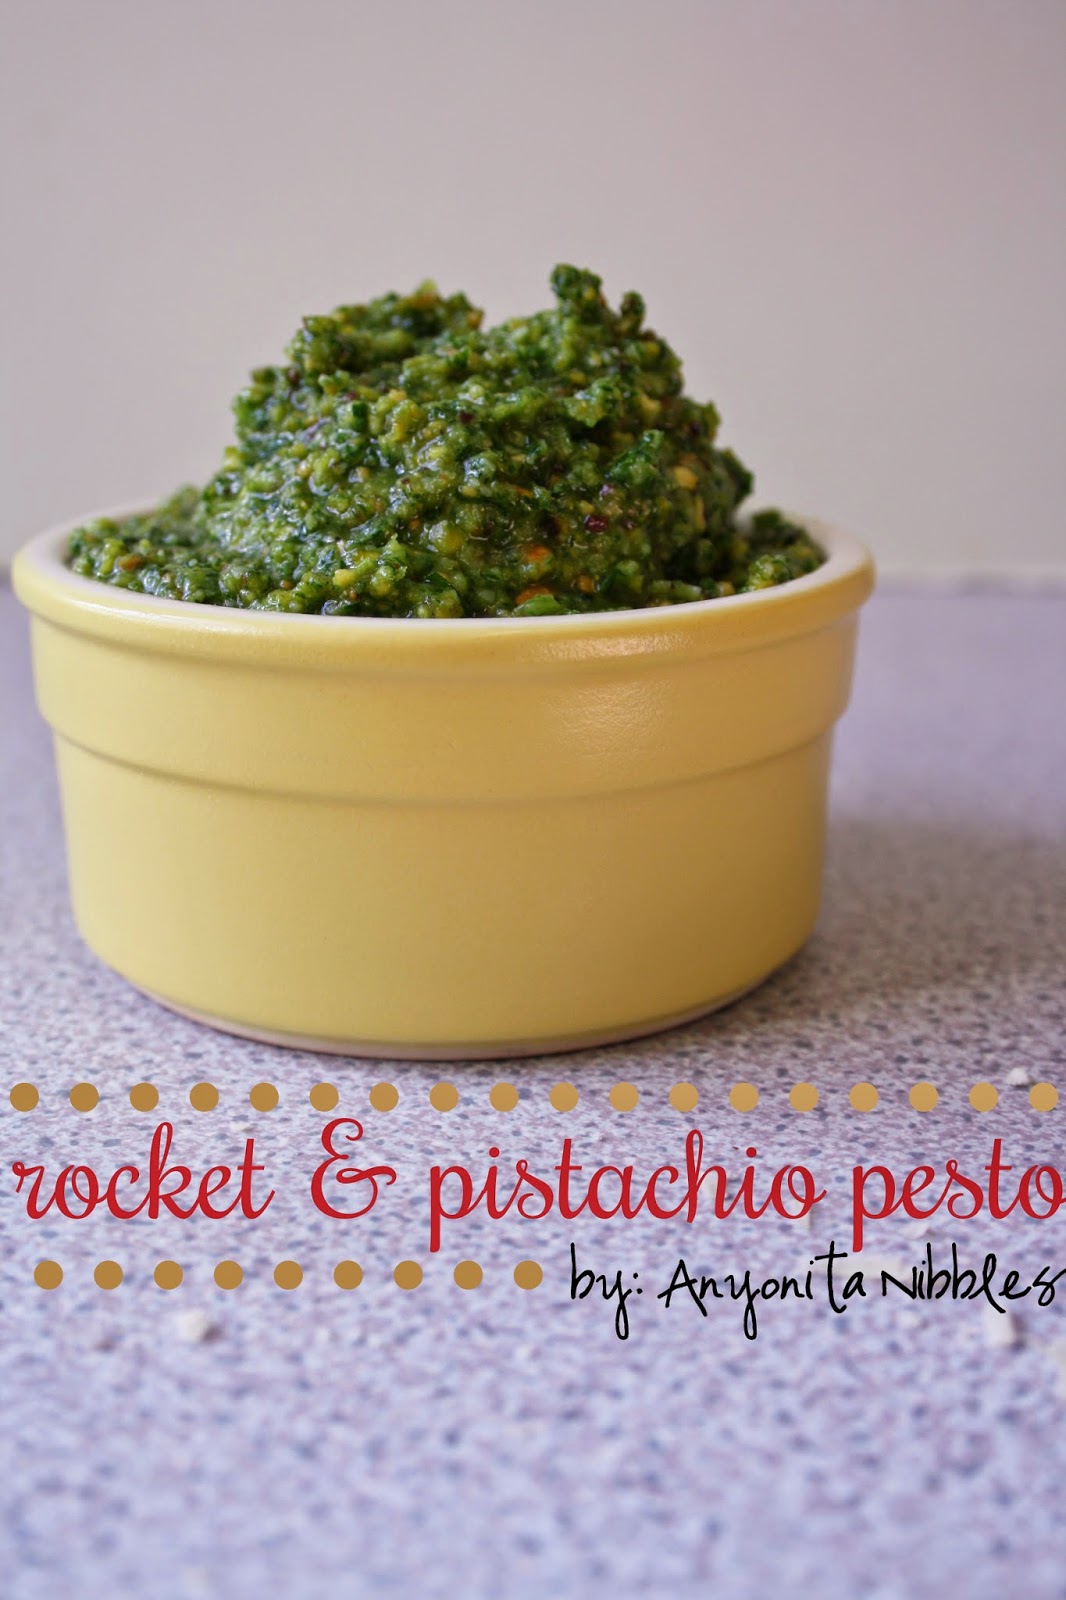 Decadent and delicious rocket pistachio pesto from Anyonita Nibbles